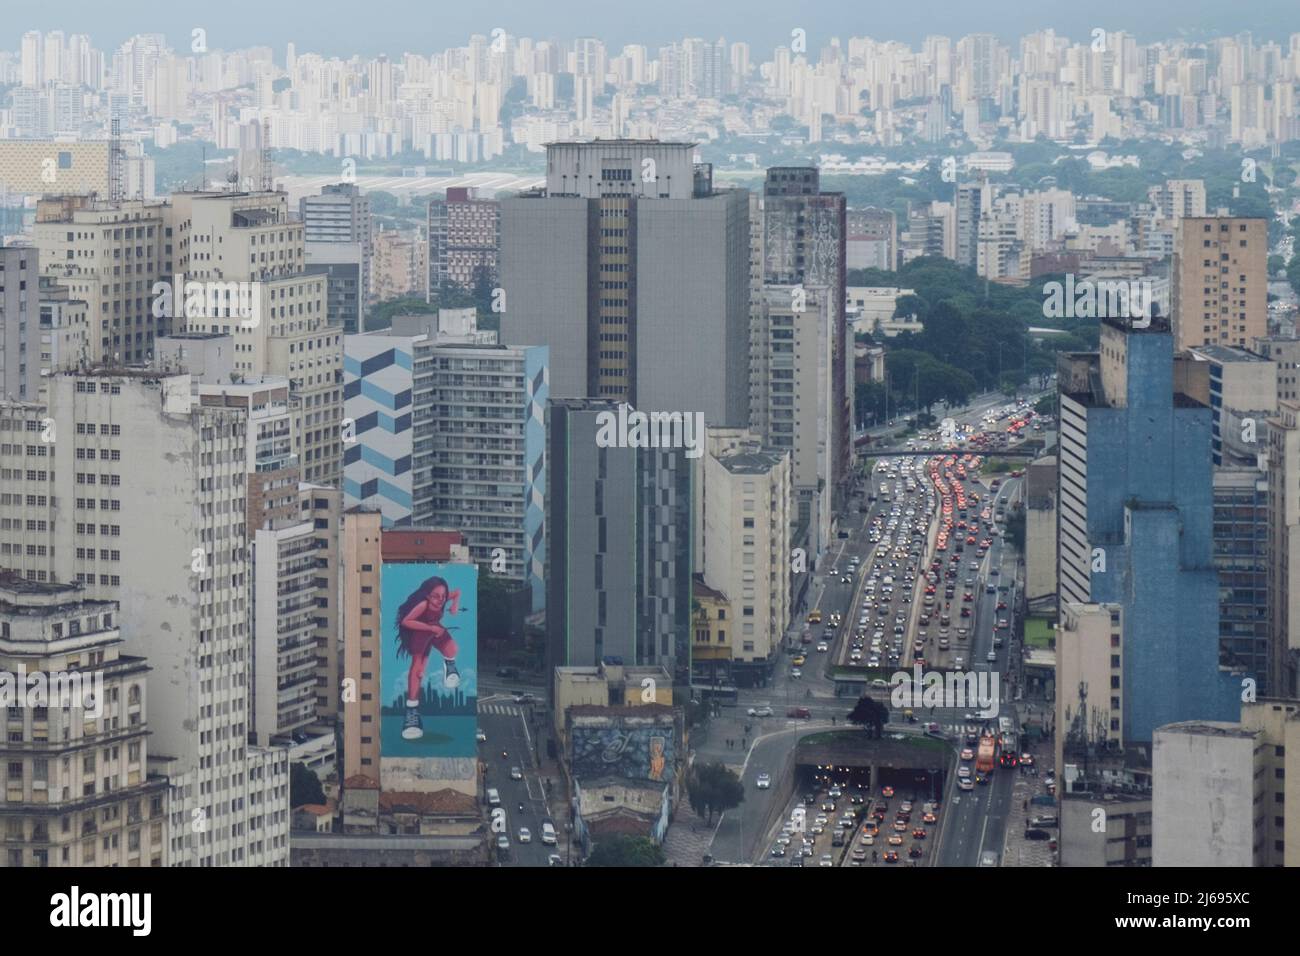 Elevated view of downtown skyscrapers, heavy traffic on Avenue Prestes Maia, rainy season sky, Sao Paulo, Brazil Stock Photo